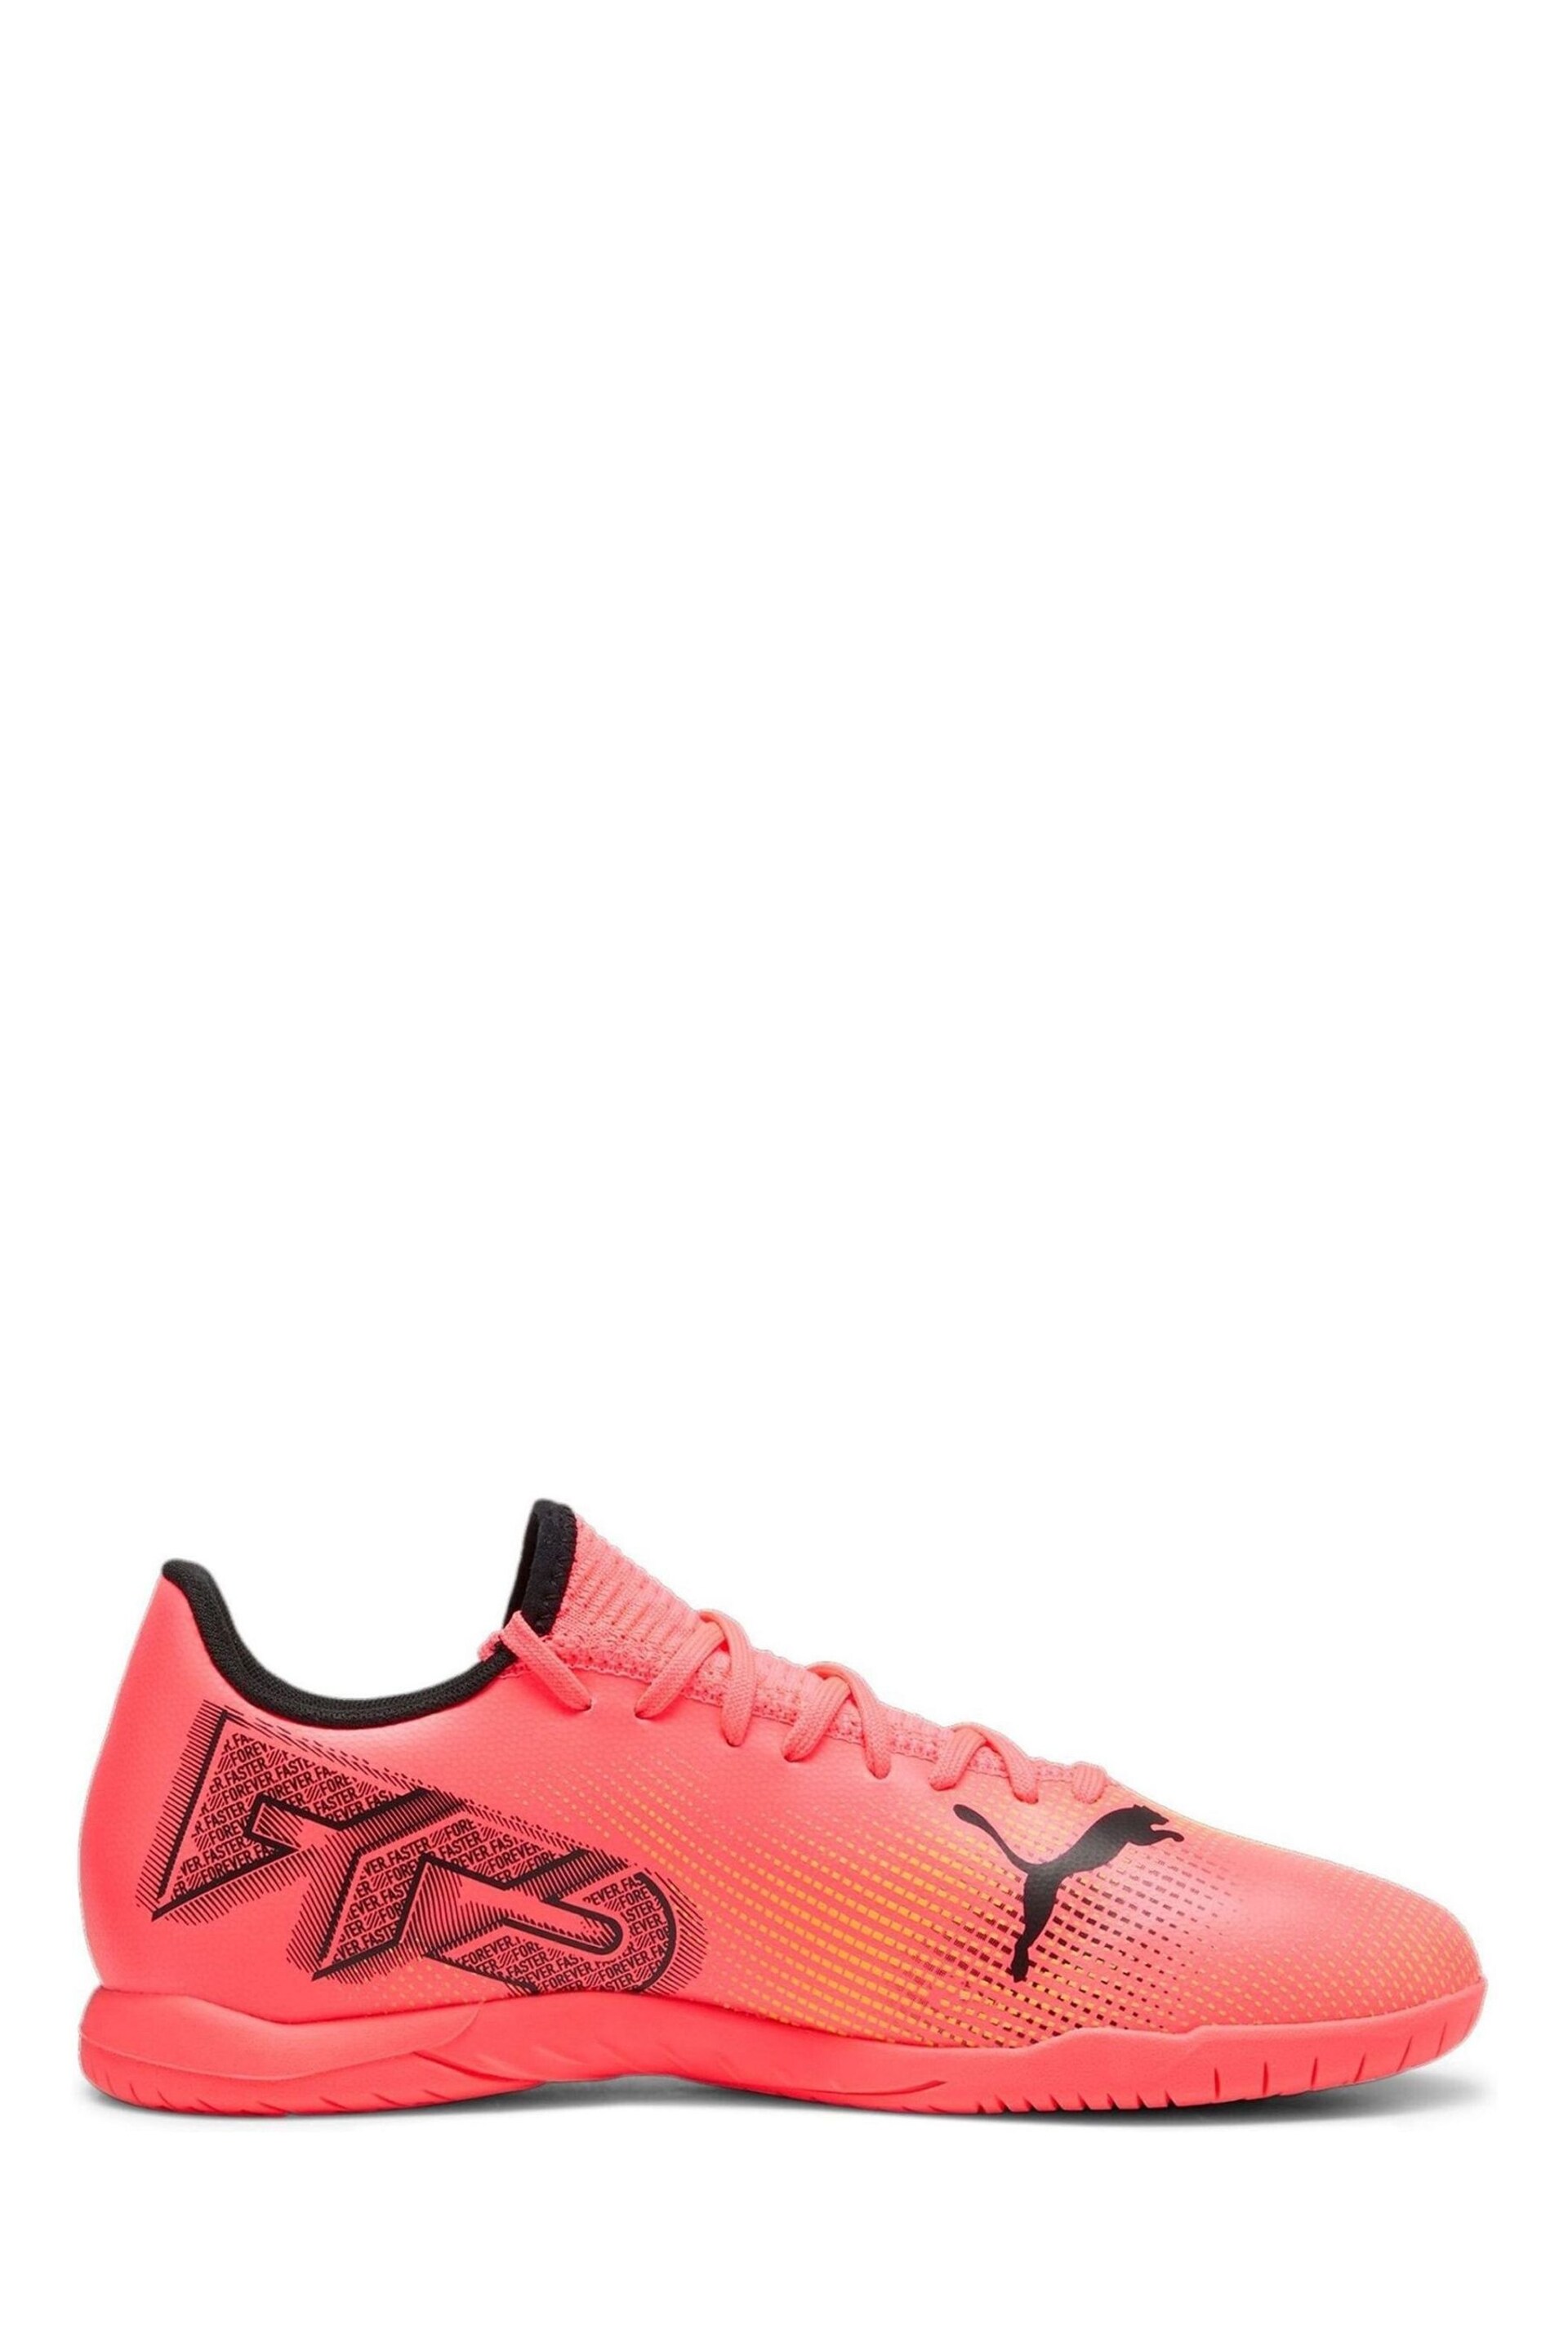 Puma Pink Mens Future 7 Play It Football Boots - Image 1 of 1